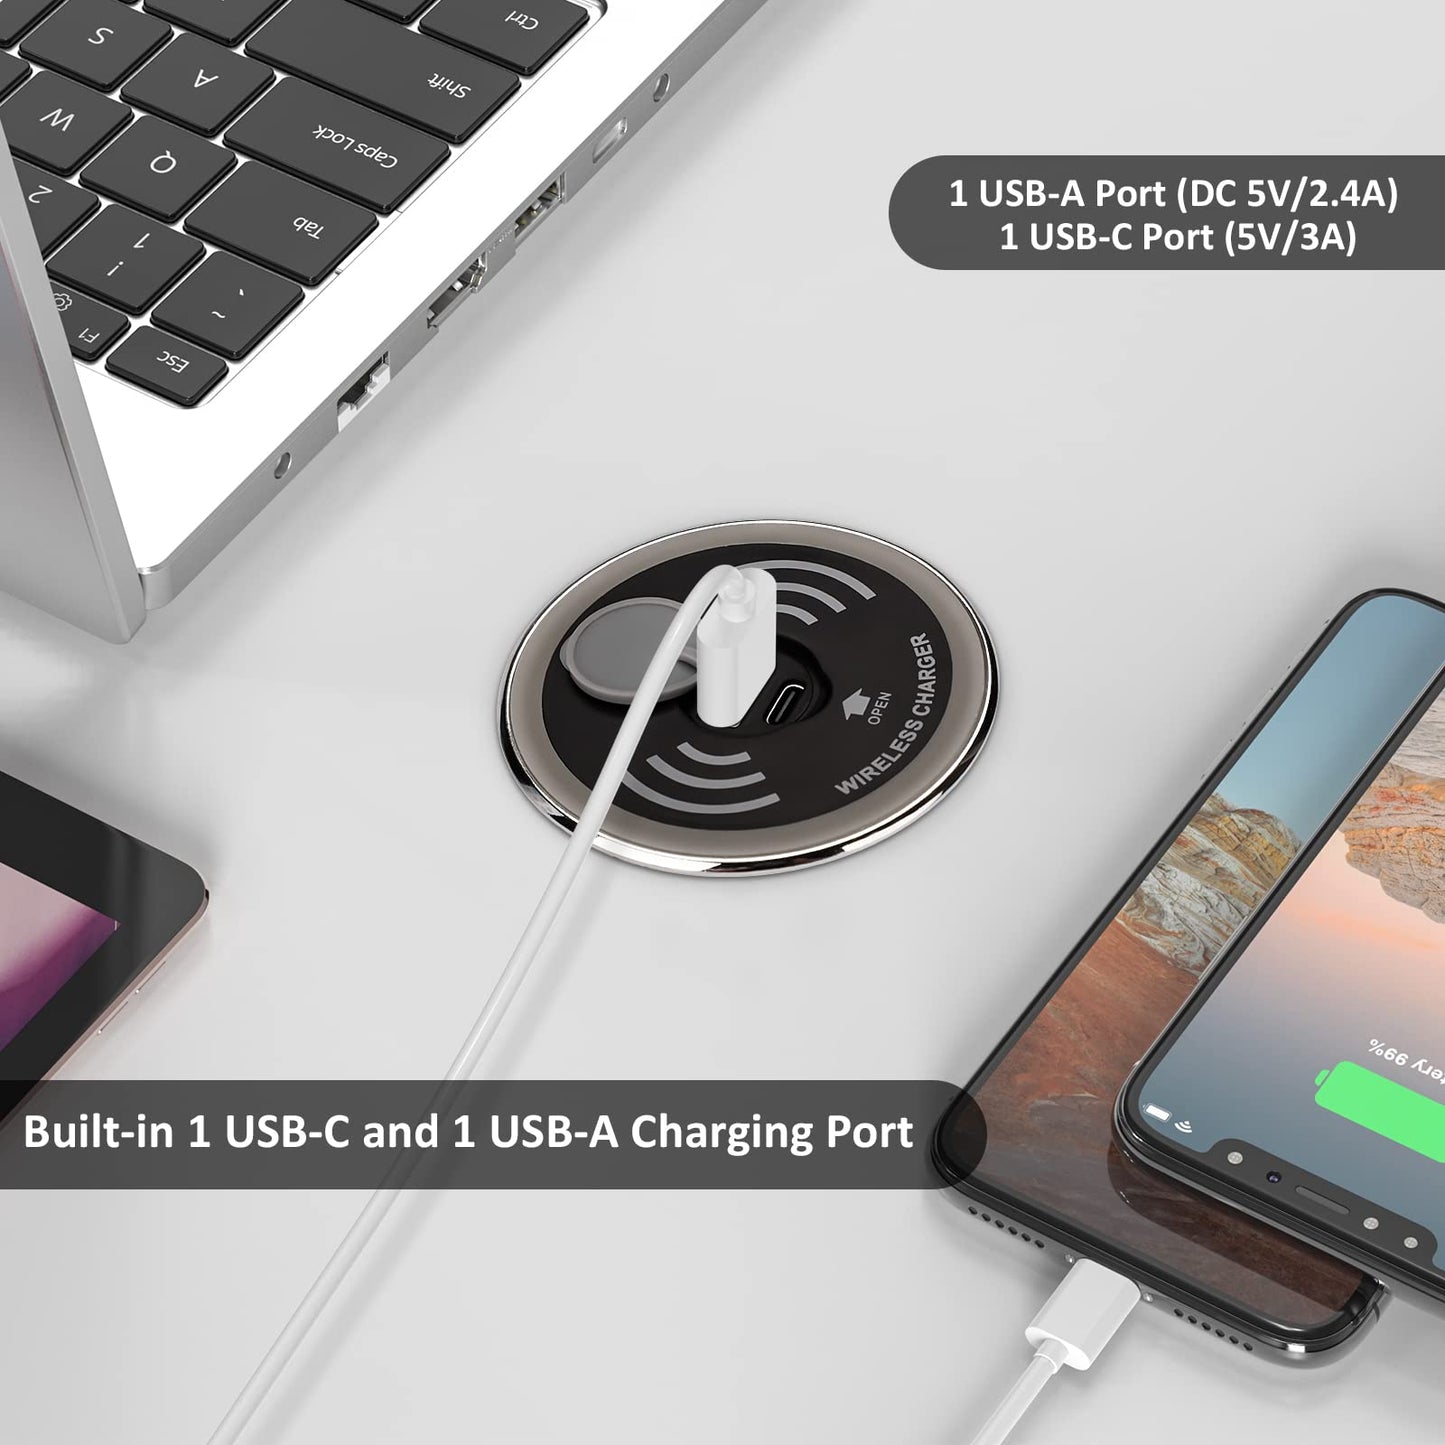 Desktop Power Grommet with USB Port & Wireless Charger